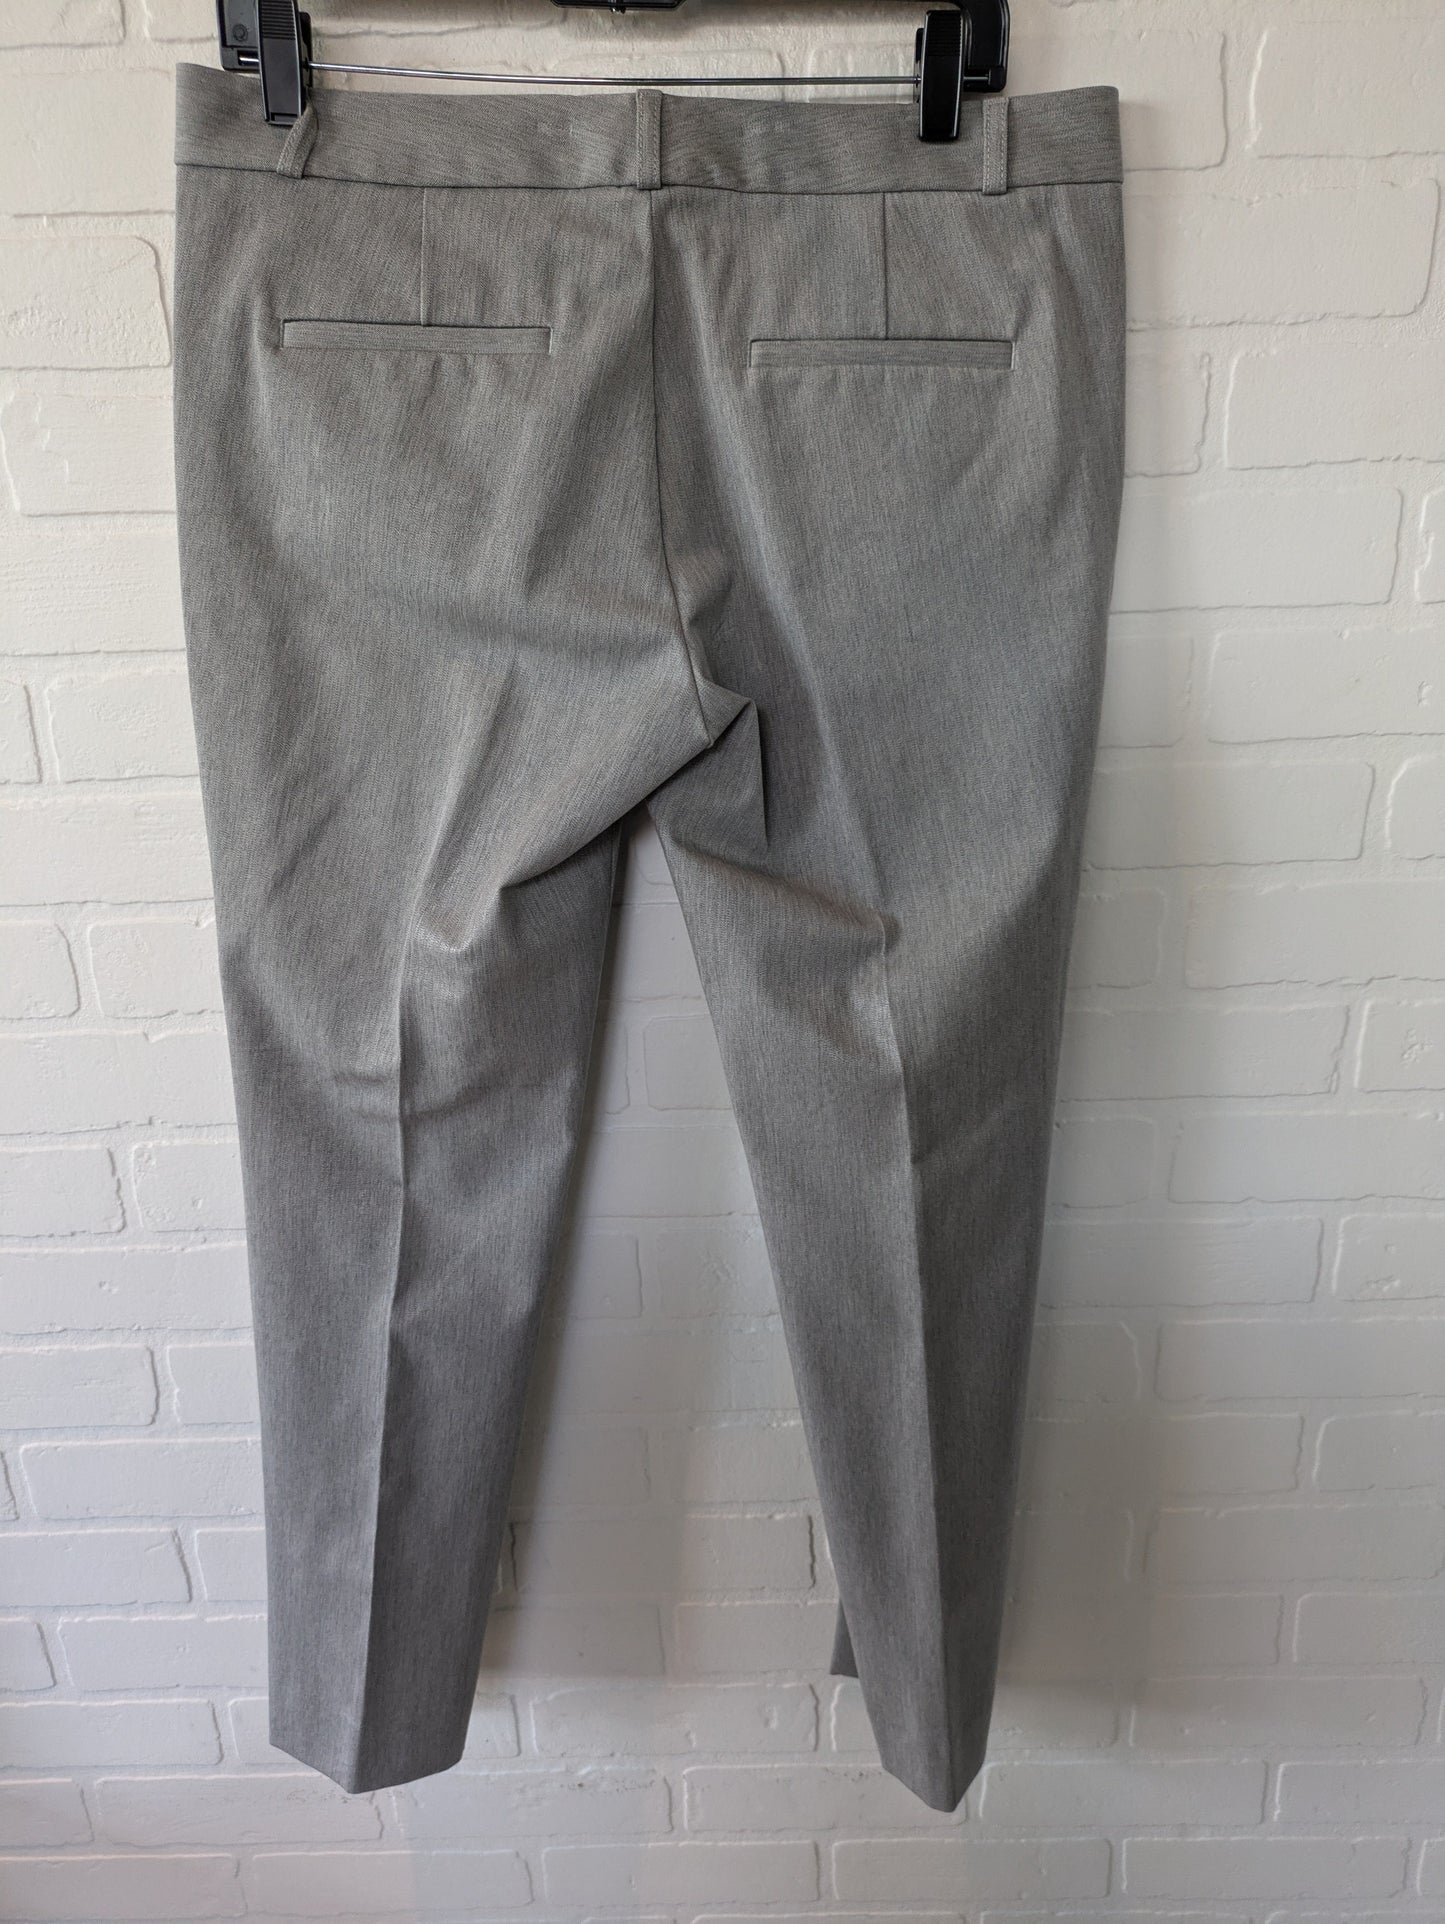 Grey Pants Dress Banana Republic, Size 8